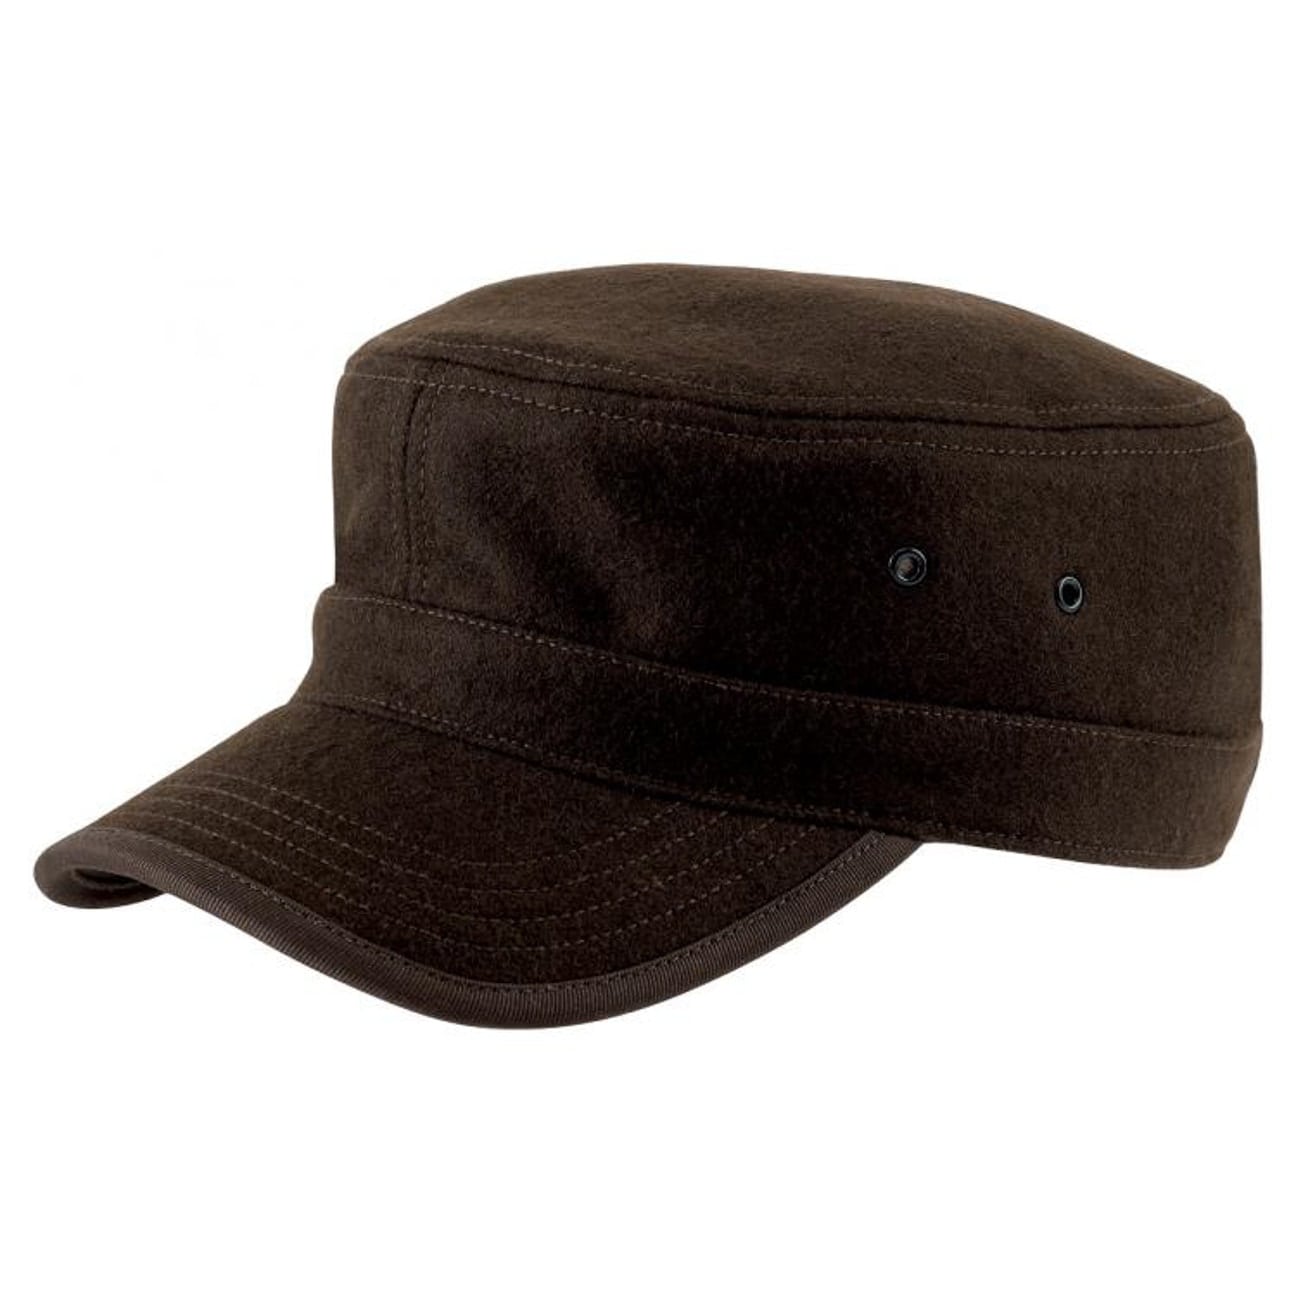 Damen Herren Cubacap Hut Kappe Armycap Militär Military Schirmmütze Mütze Hüte 